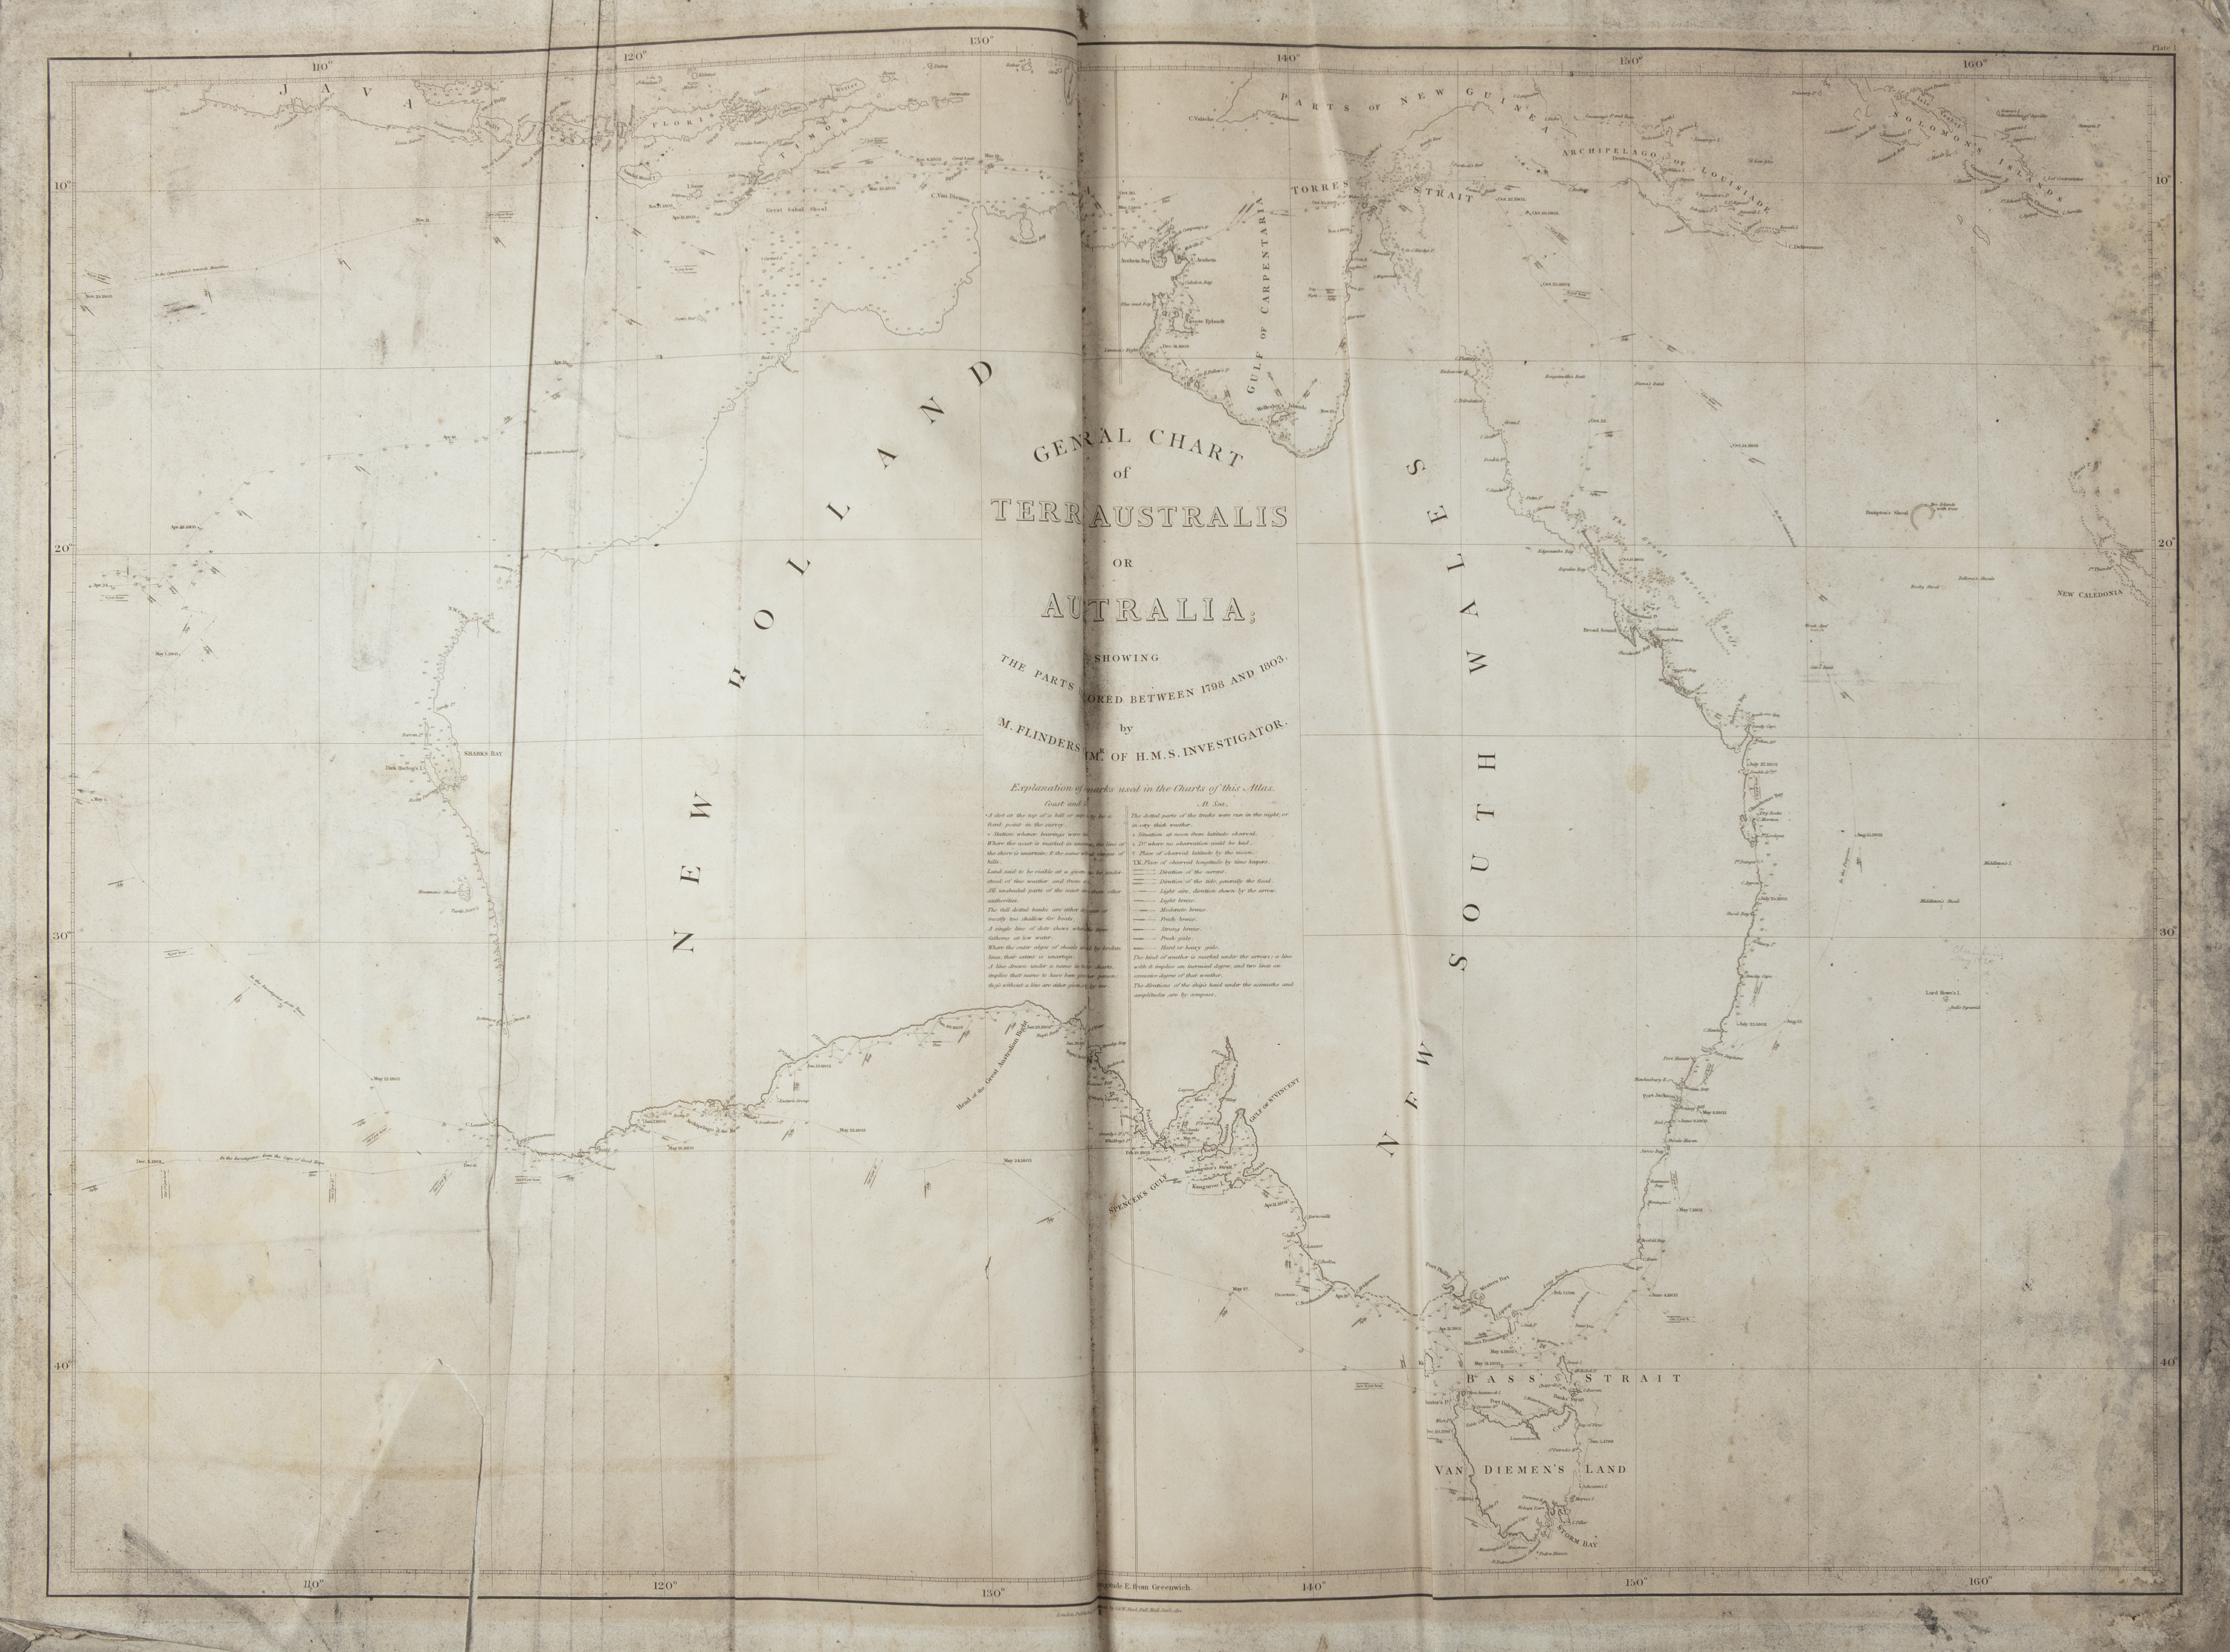 MATTHEW FLINDERS (BRITISH 1774 - 1814) A Voyage to Terra Australis, showing the parts explored